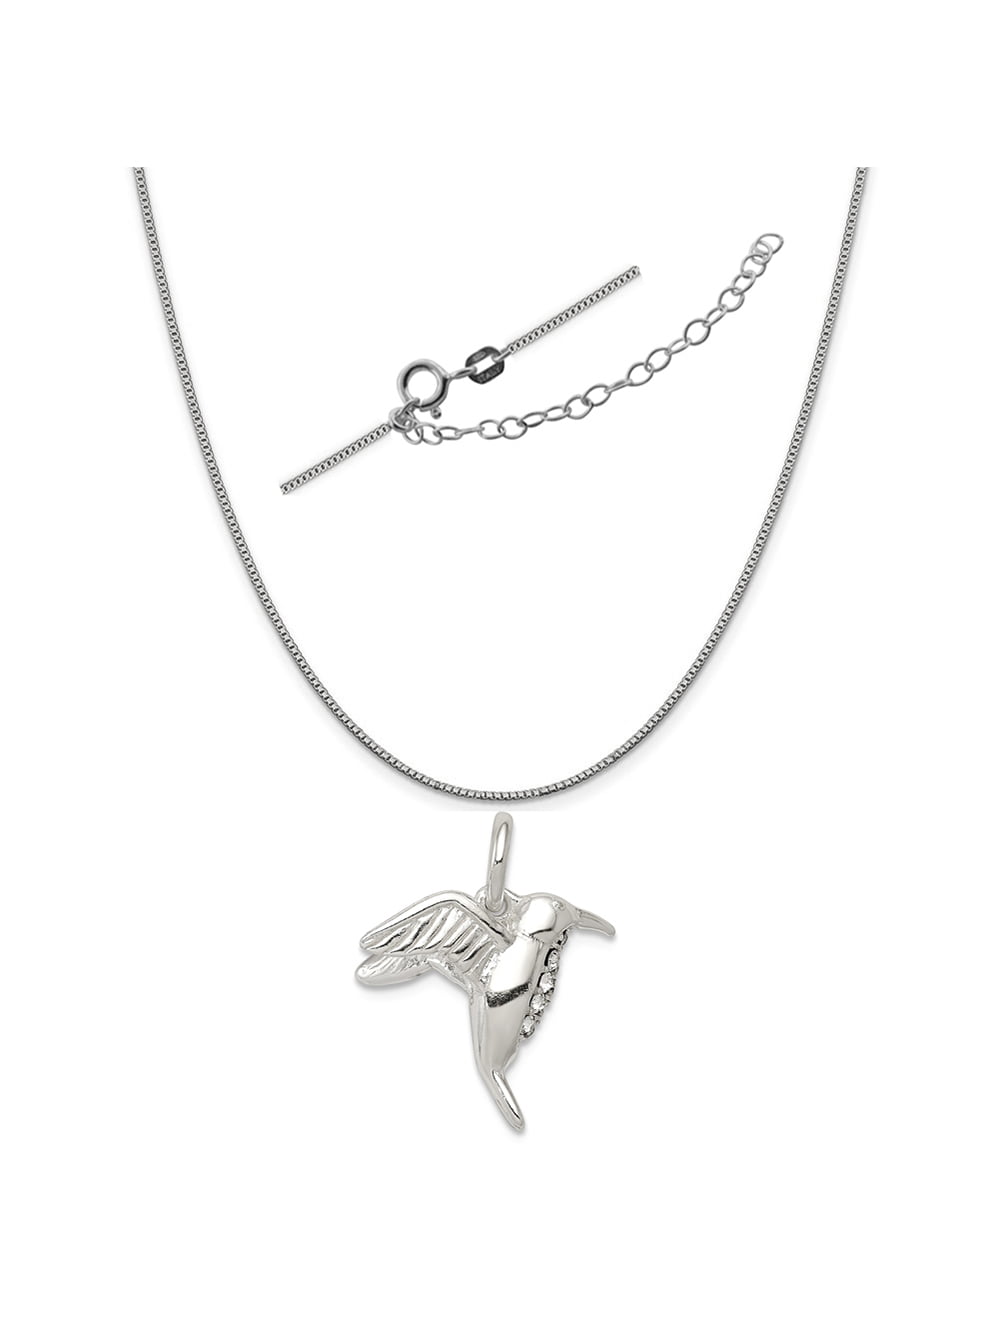 Blue Hummingbird 20mm Necklace Hummingbird Jewelry Includes 18 Chain Bird Art Charm Pendant Necklace Hummingbird Jewelry